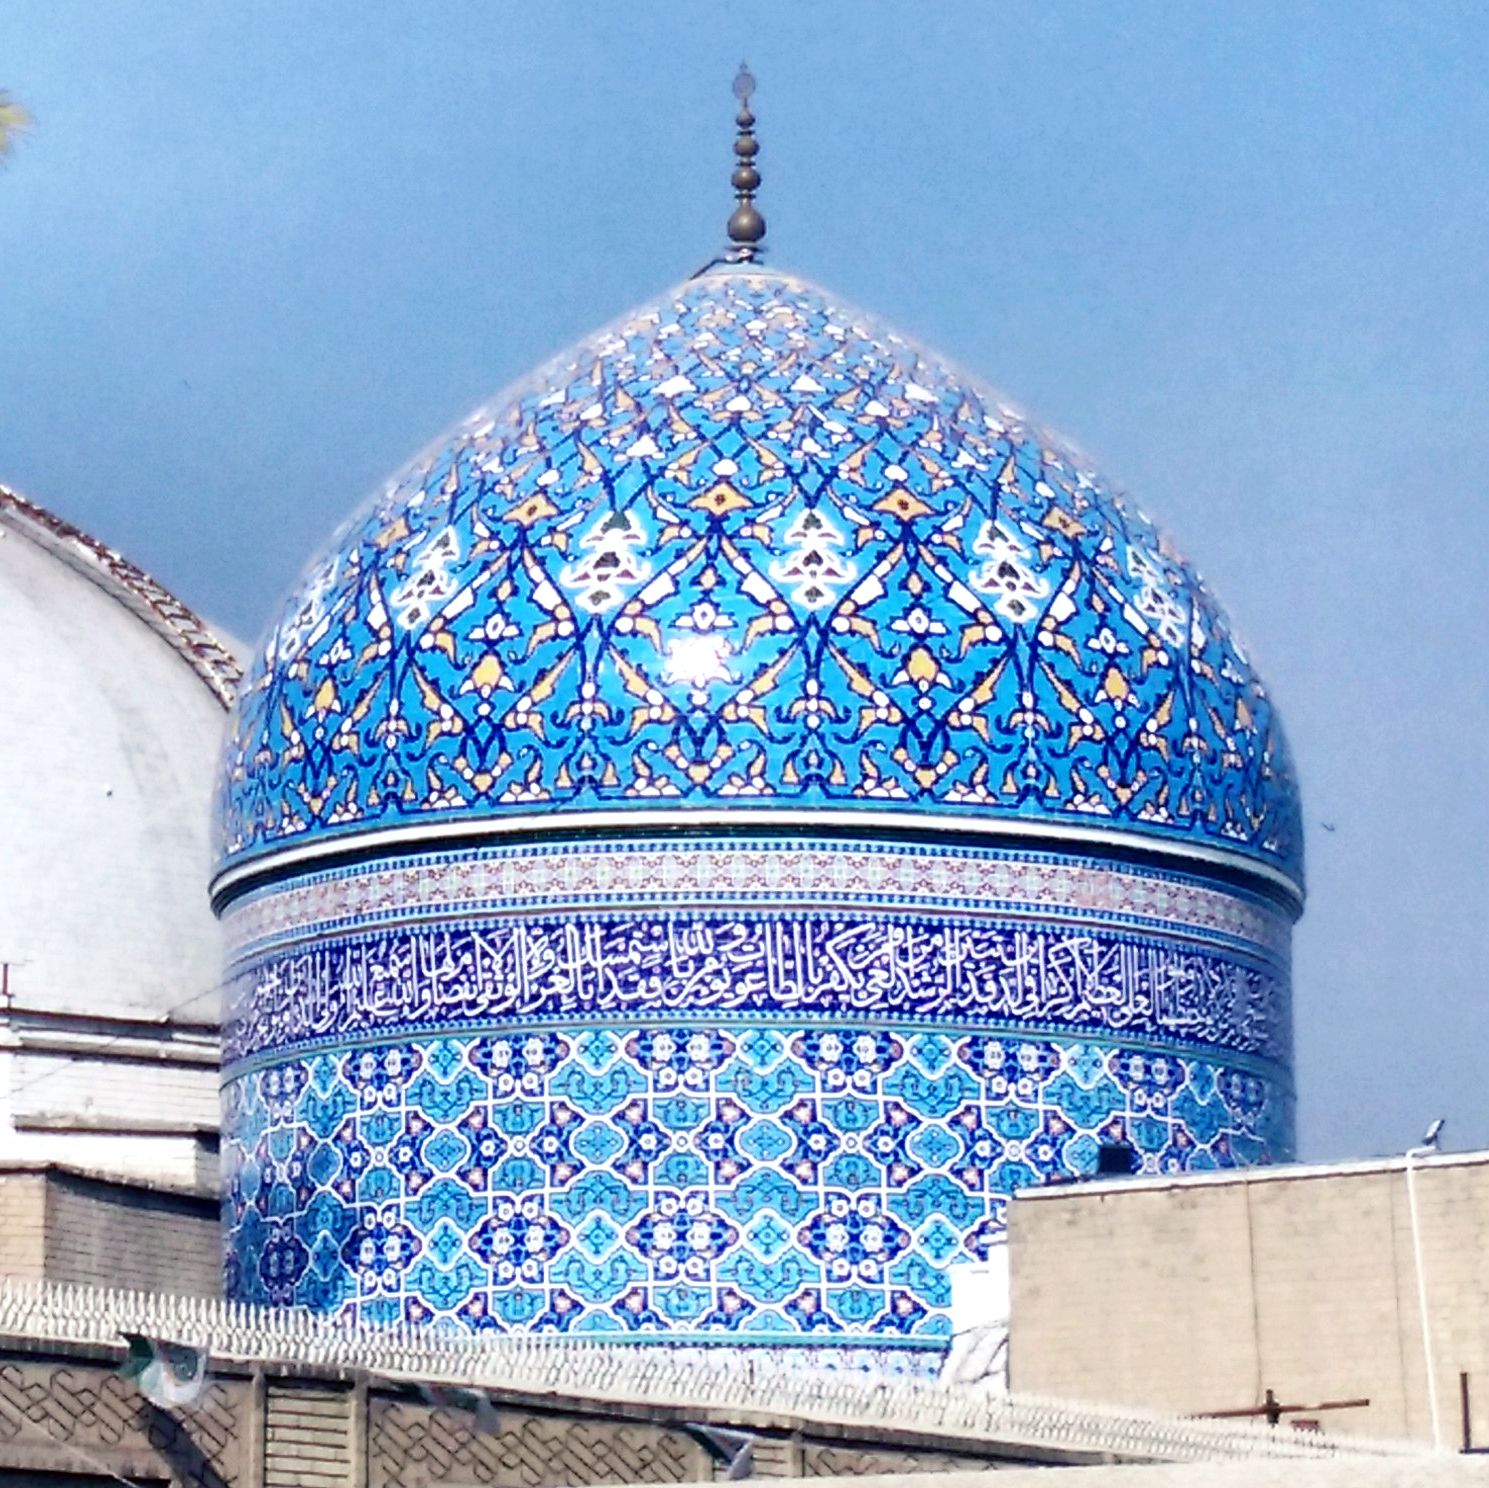 Sharif Baghdad Mosque  WhatsApp DP, HD Images